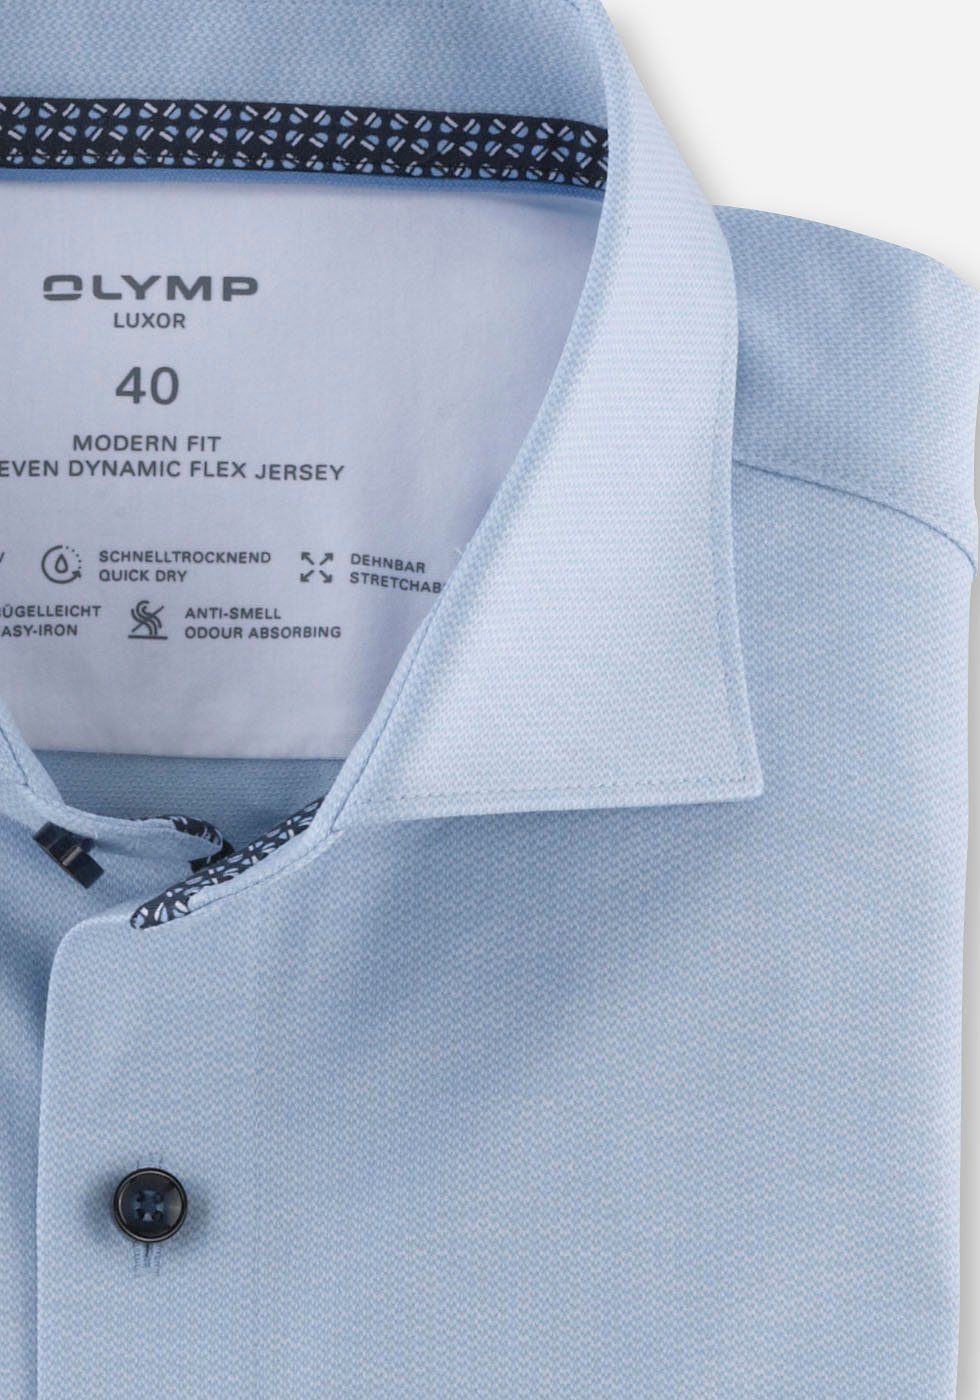 aus der Luxor Businesshemd 24/7 OLYMP Luxor der Fit-Serie Modern fit bleu aus modern